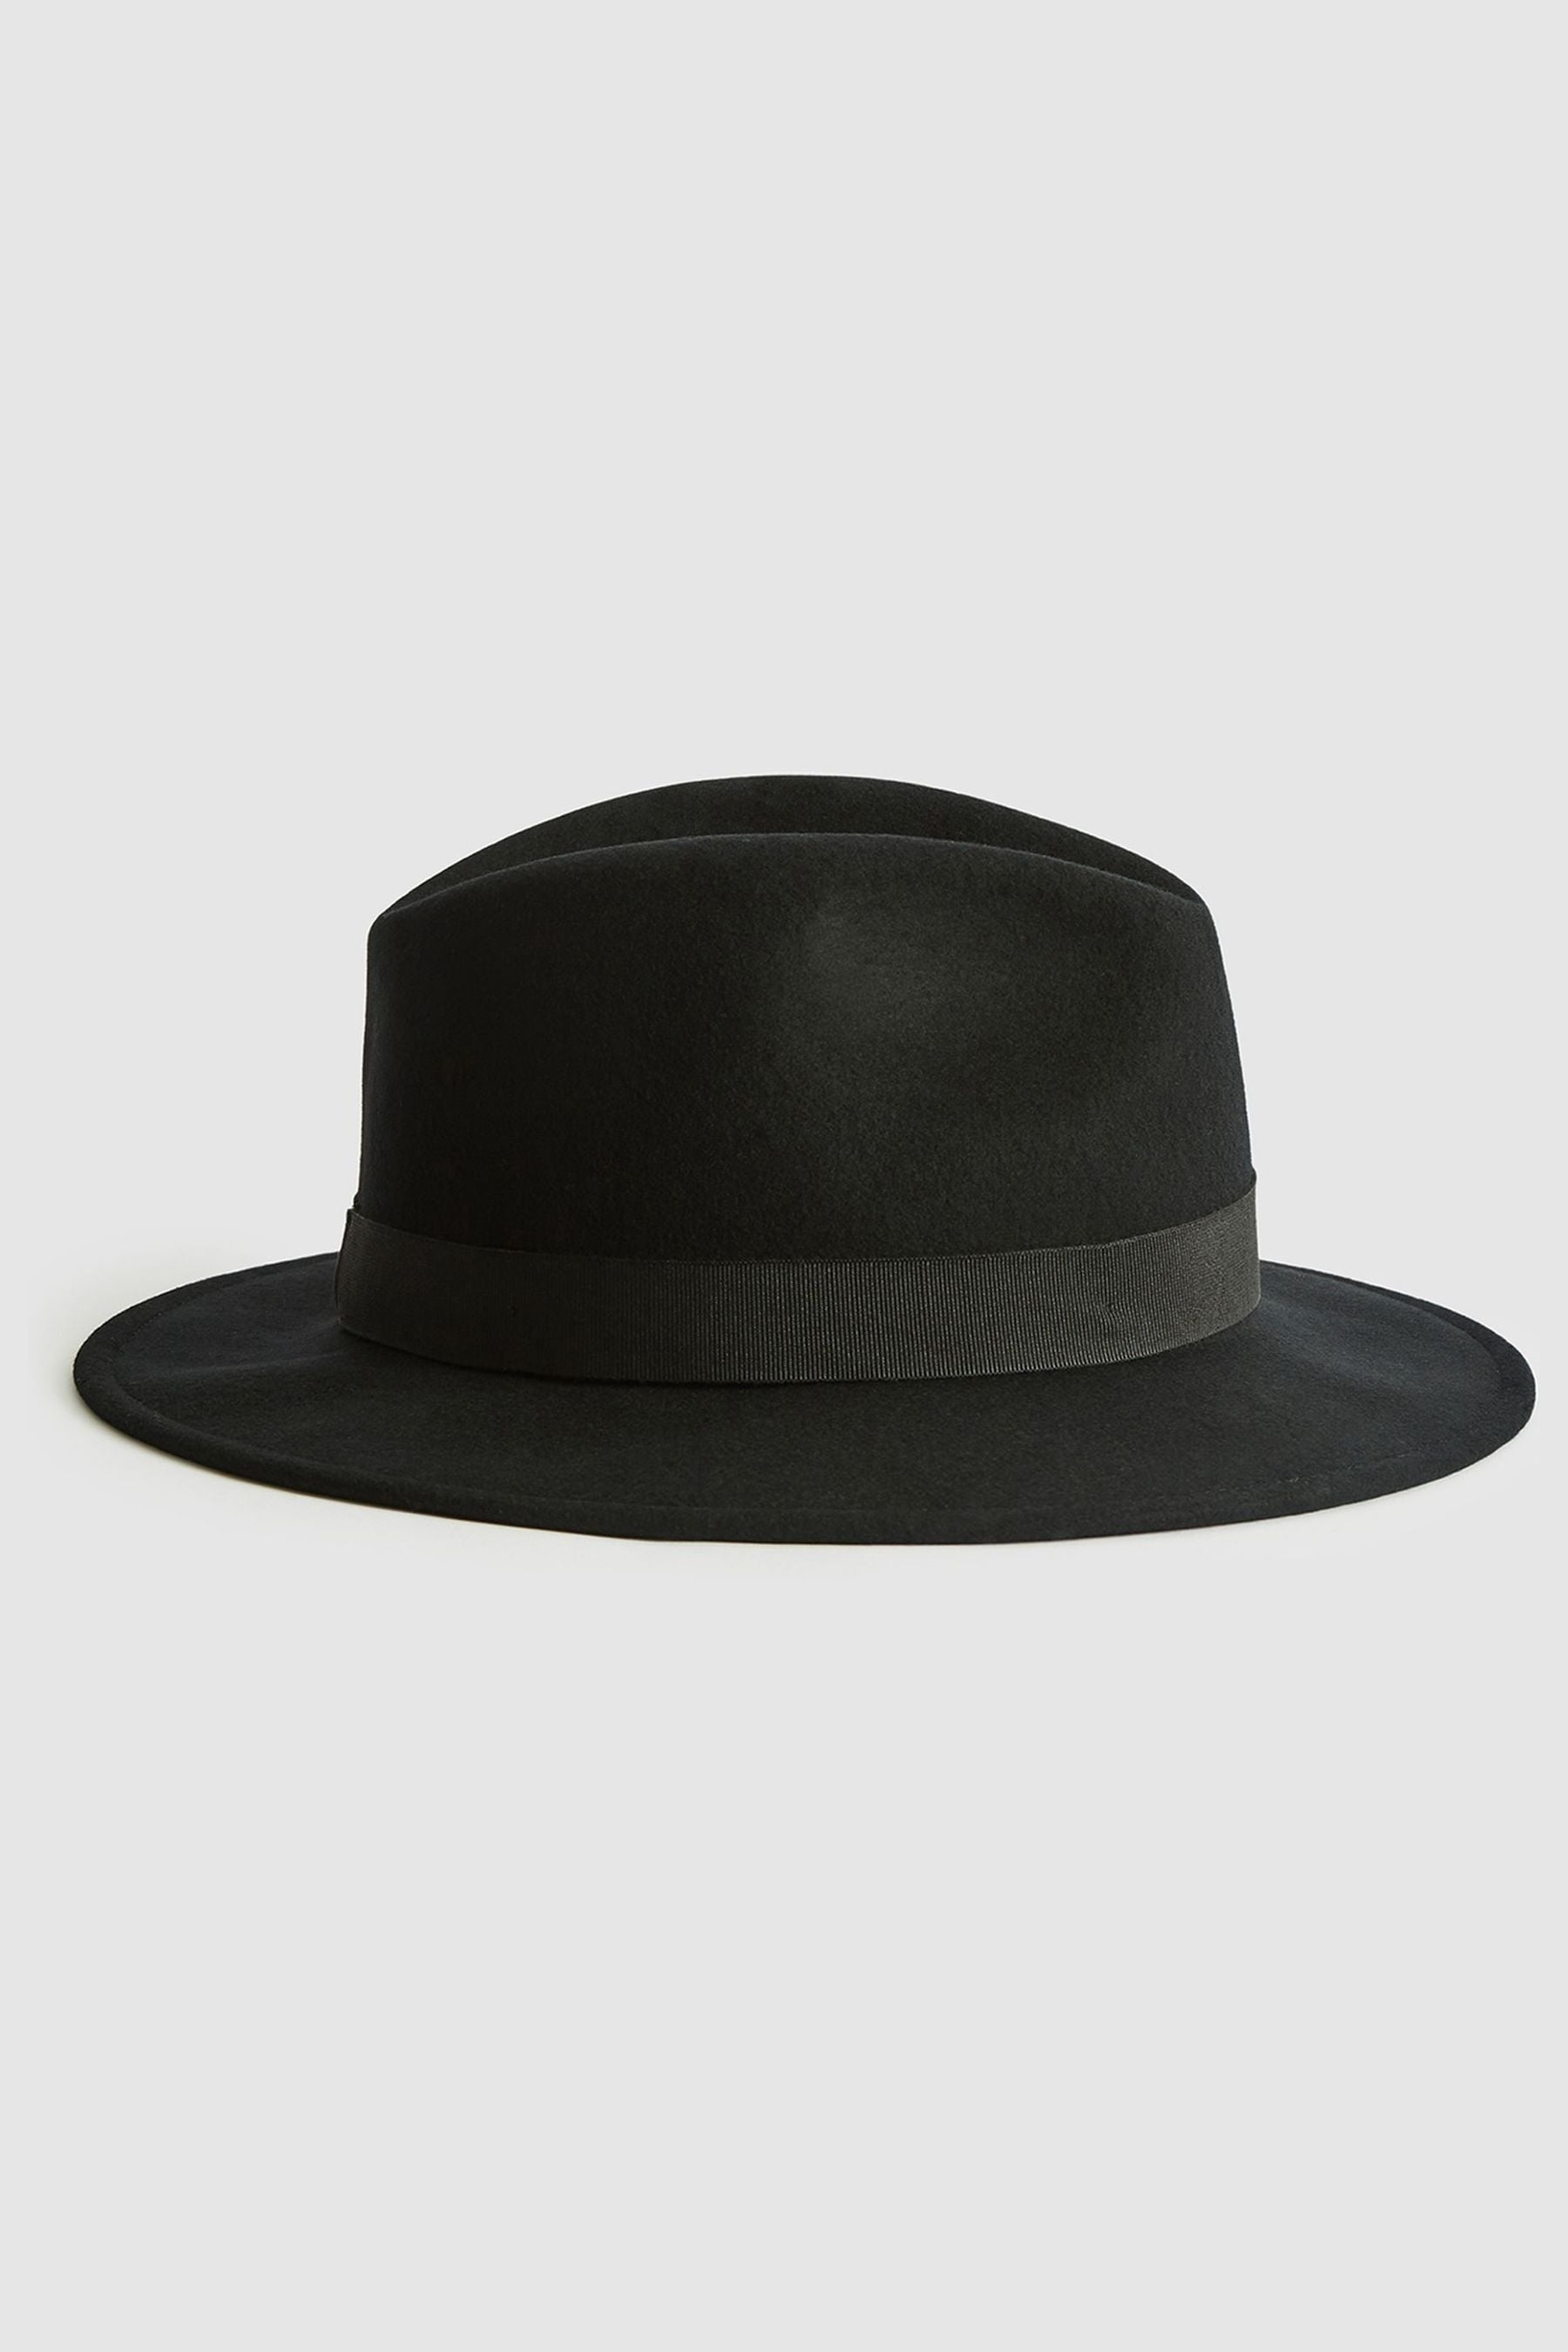 Reiss Ashbourne - Black Wool Fedora Hat, M/l